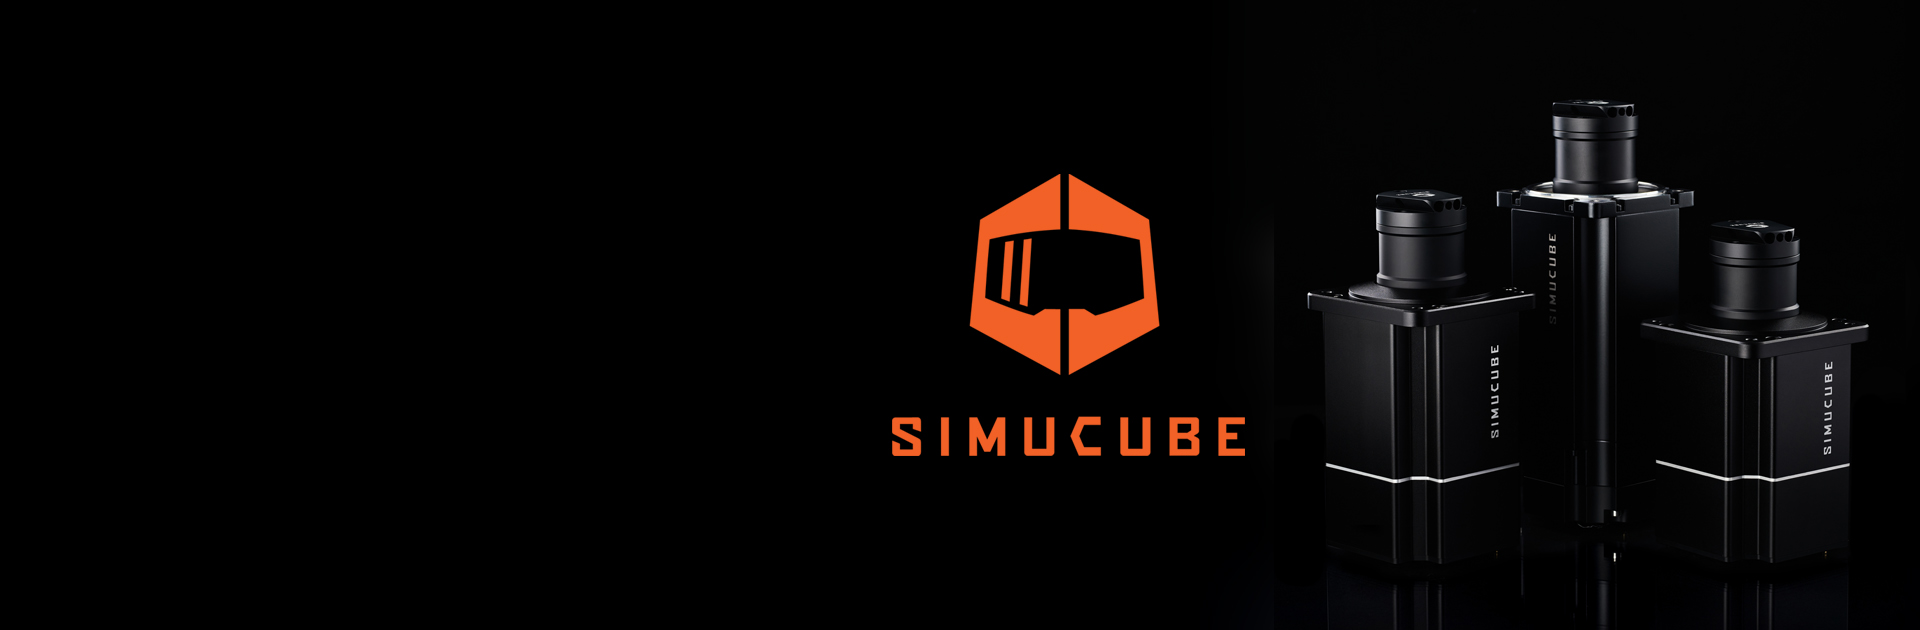 Official Simucube OEM partner